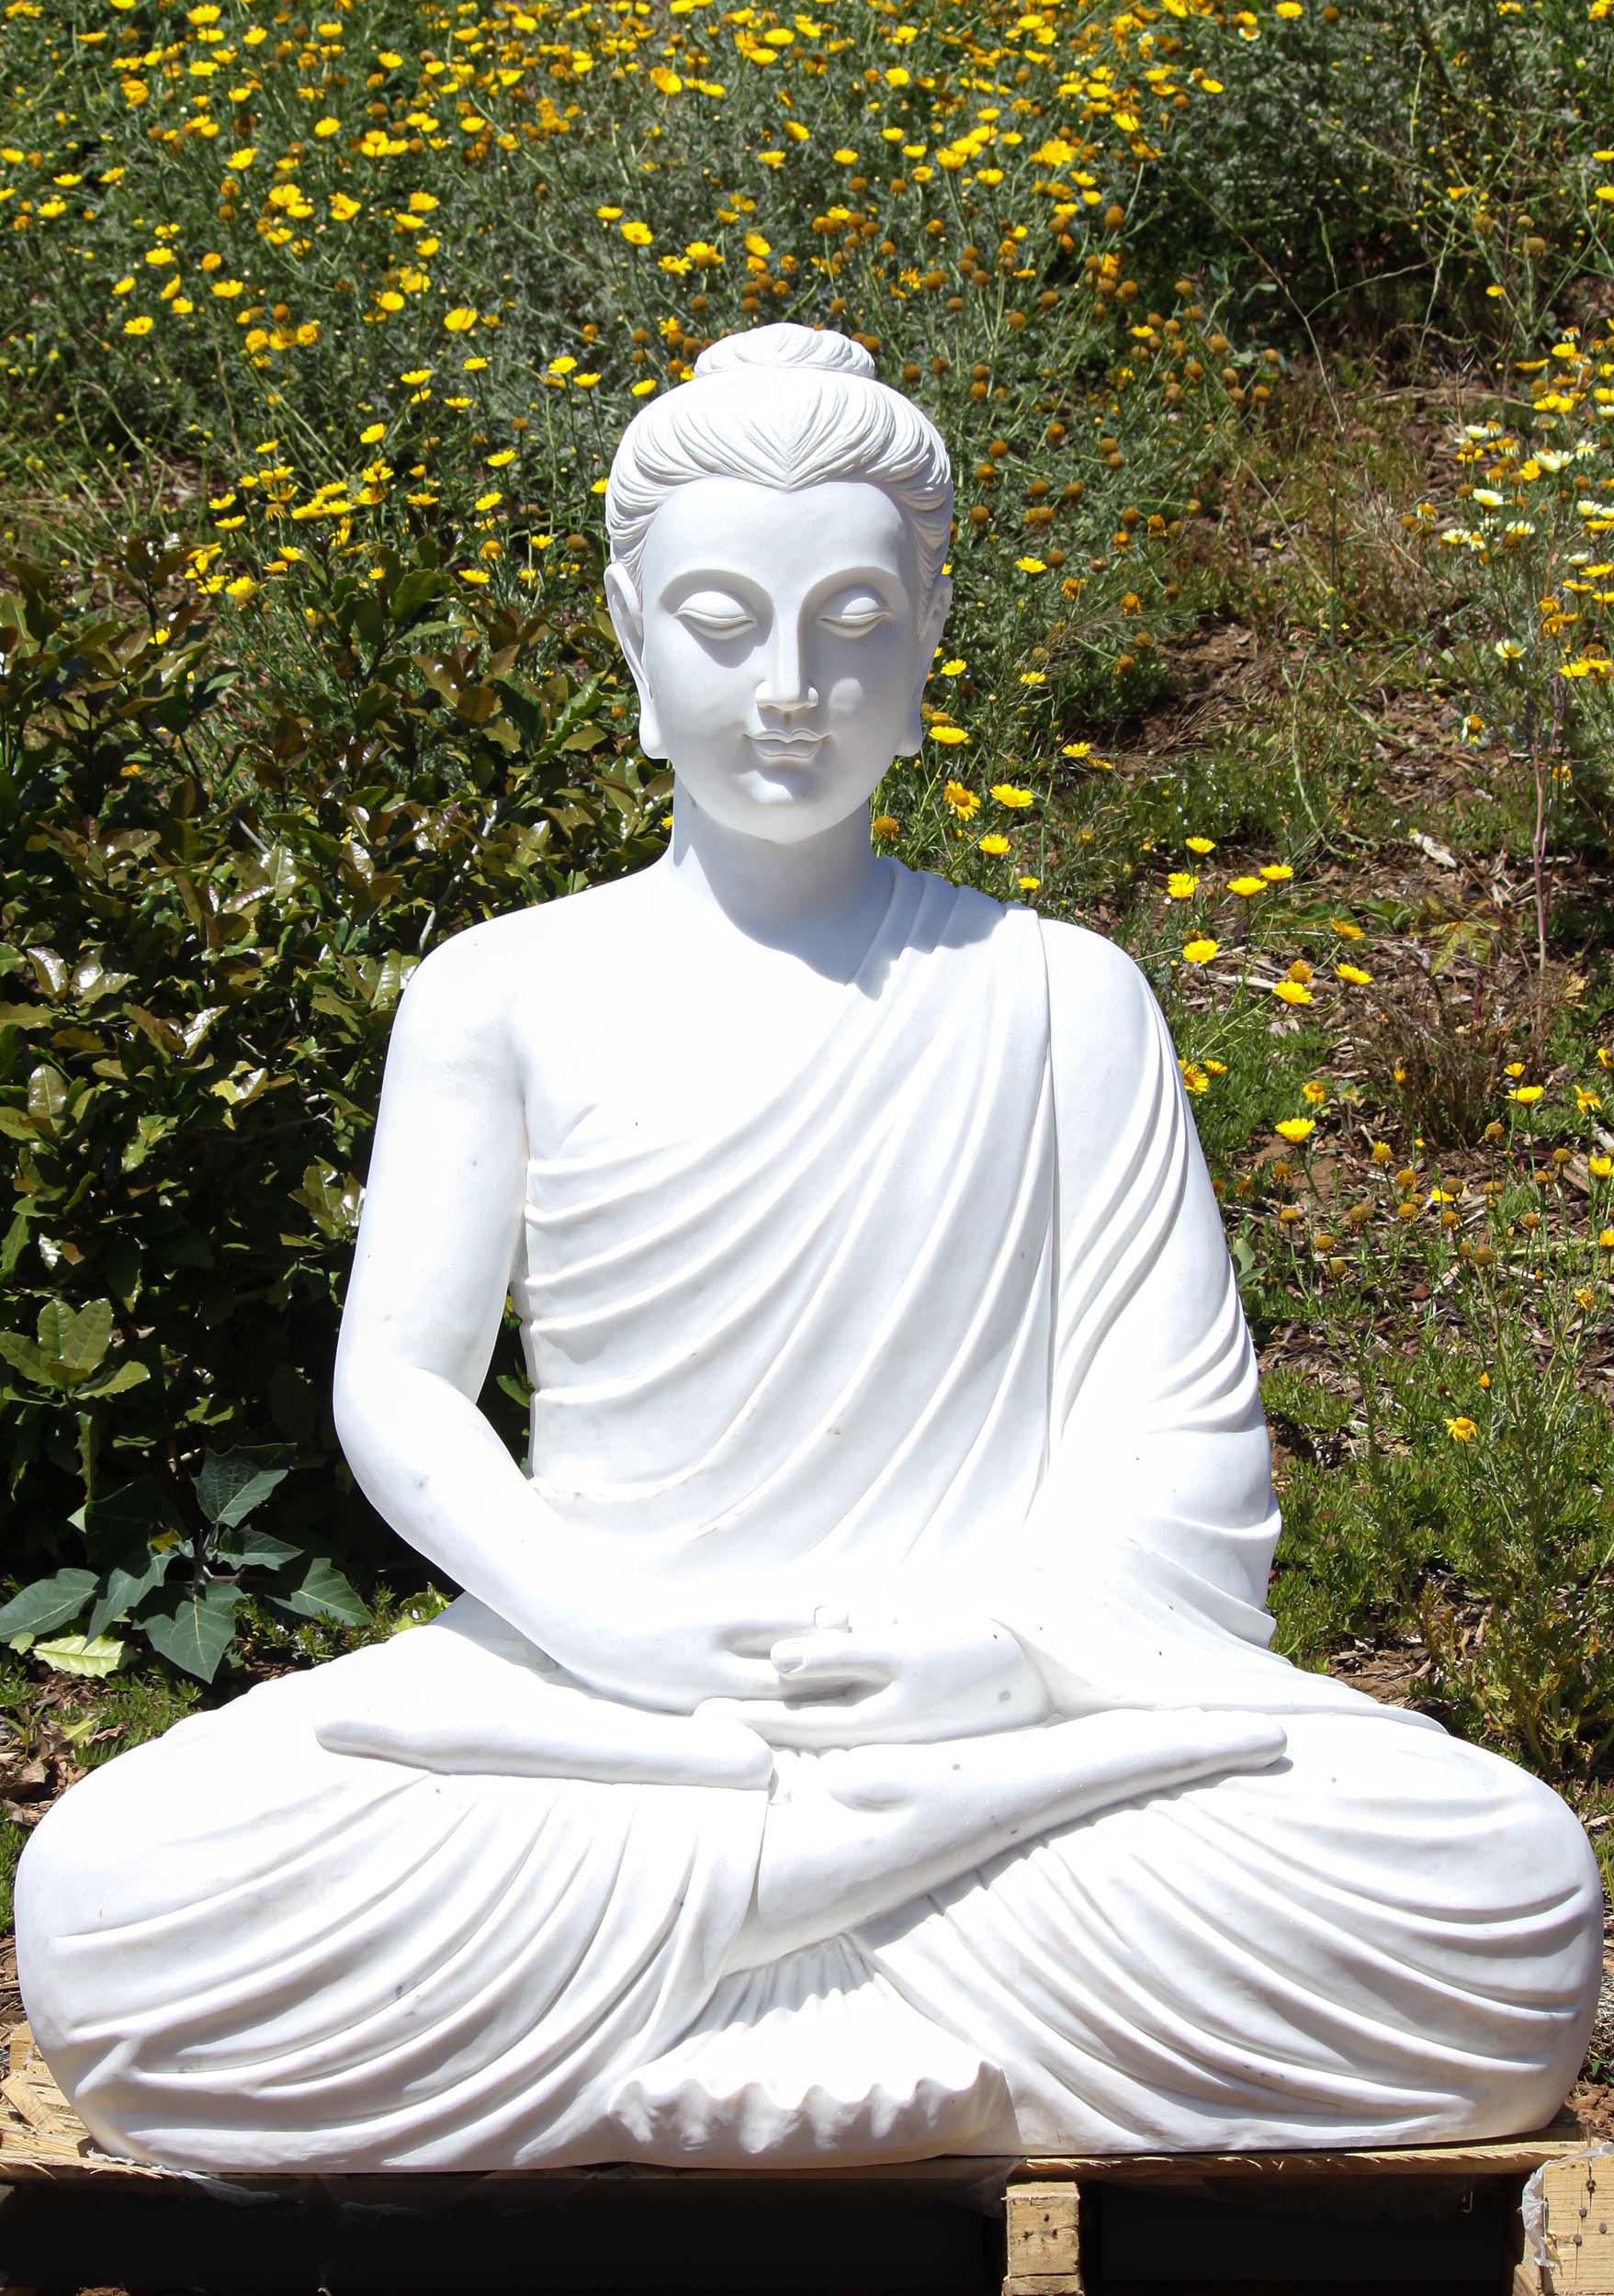 https://www.lotussculpture.com/mm5/graphics/00000001/49/1-large-full-lotus-marble-meditating-buddha-sculpture-c.jpg